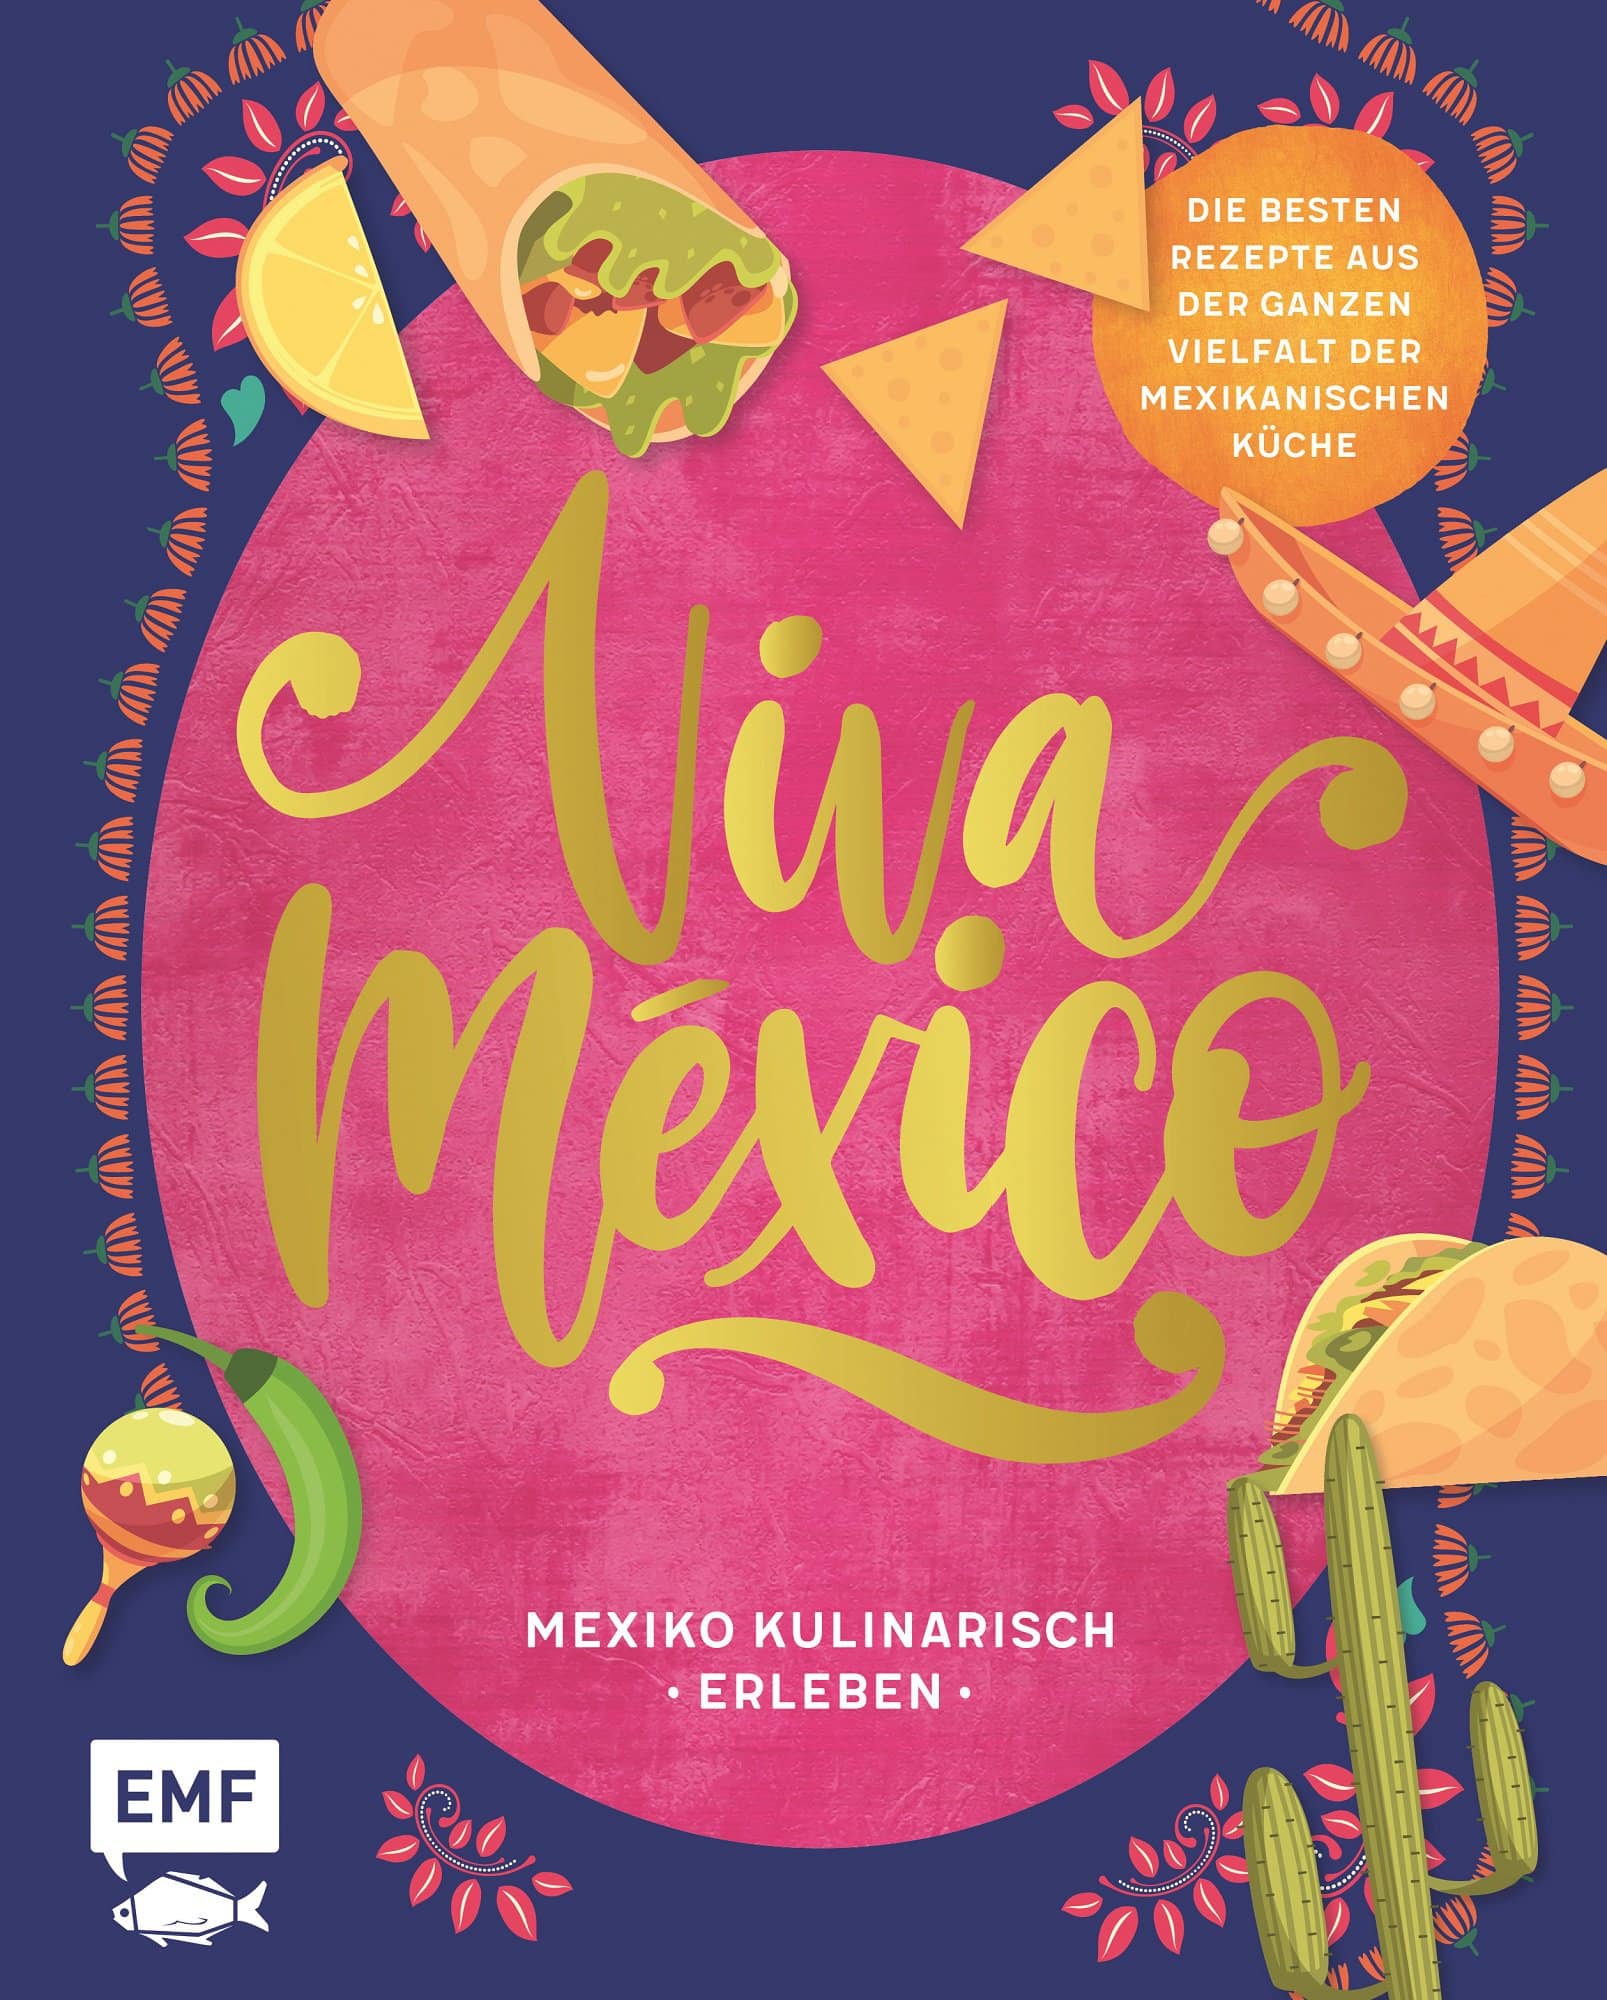 Buchcover "Viva Mexico"